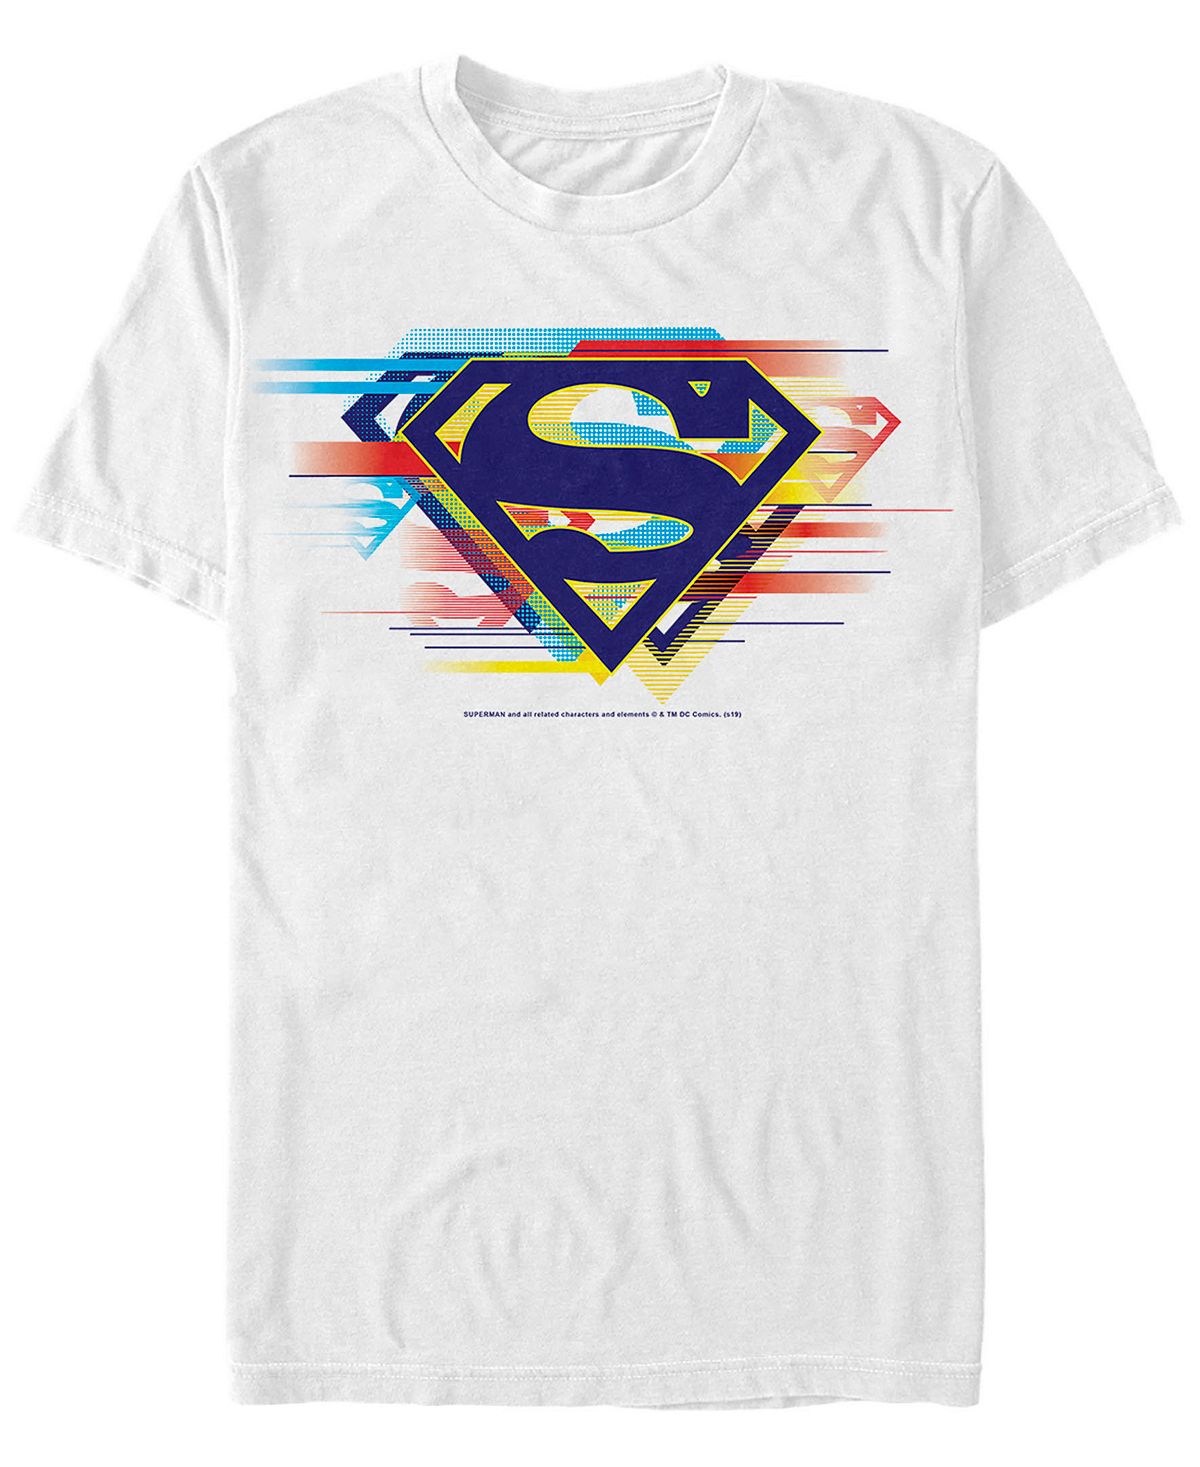 Мужская футболка с коротким рукавом с логотипом супермена dc Fifth Sun, белый цена и фото